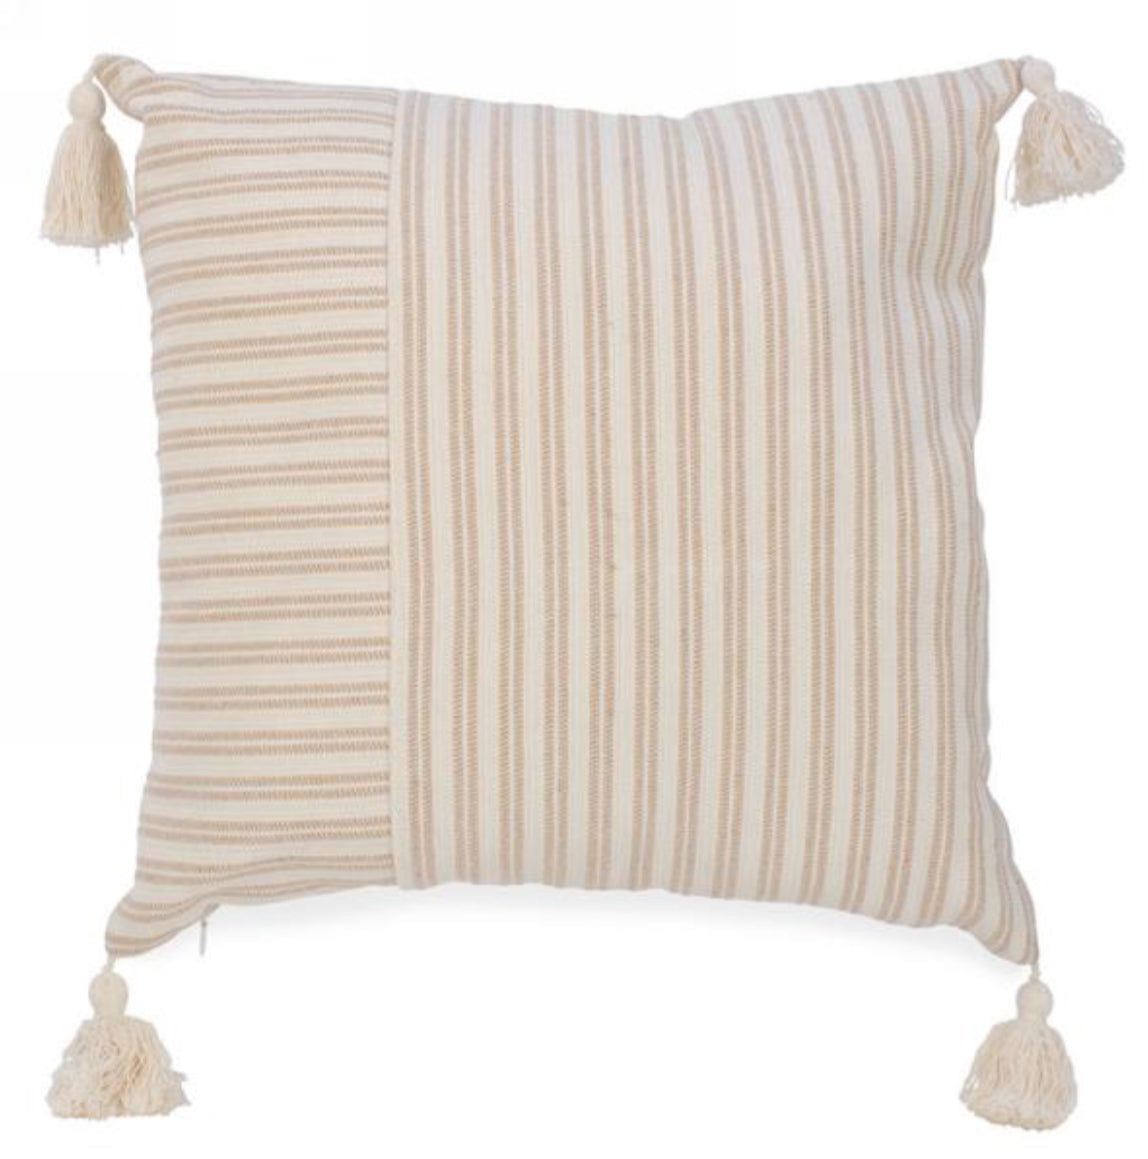 Brown Stripe Cushion with Tassels